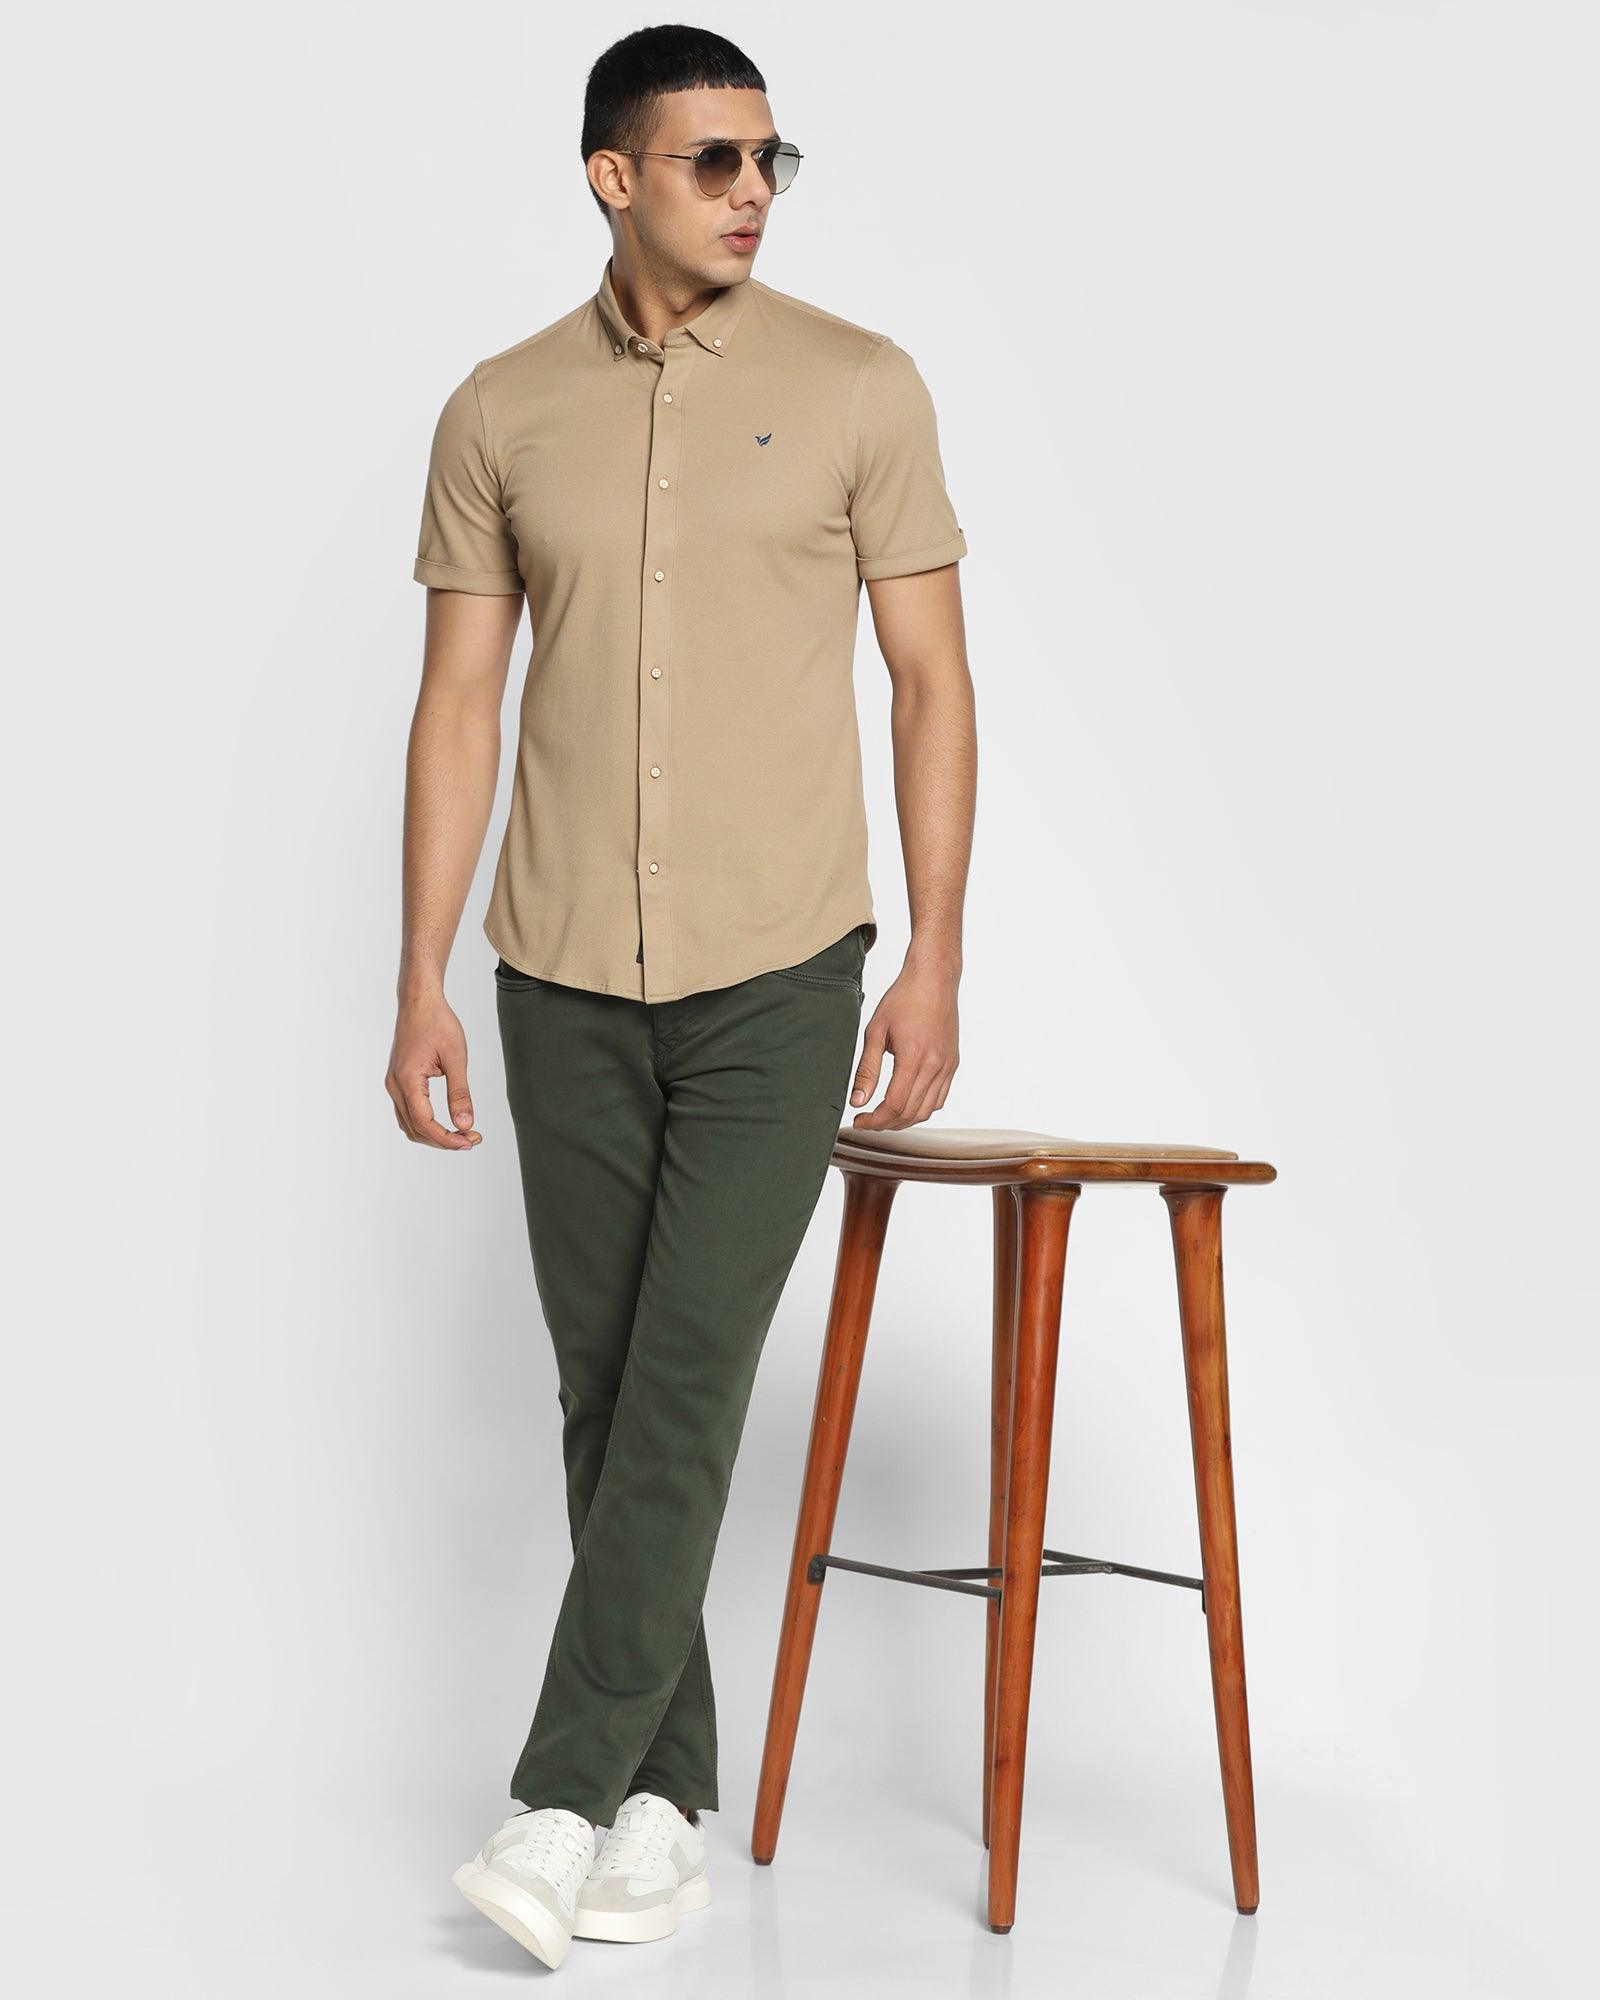 Formal Half Sleeve Beige Solid Shirt - Pareto